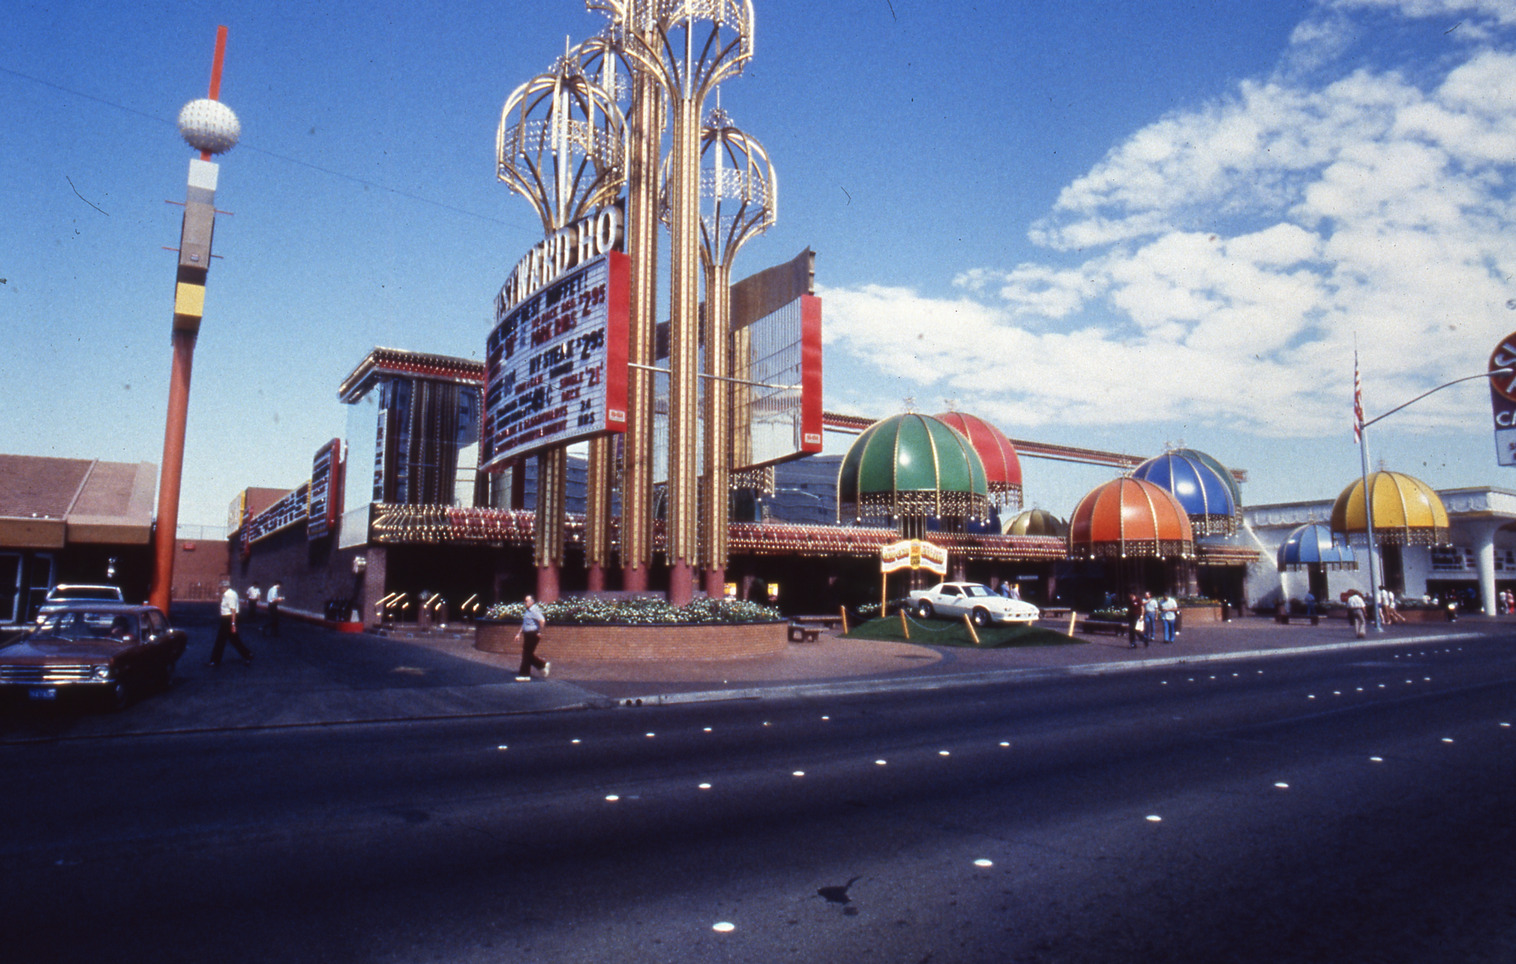 Westward Ho Hotel and Casino sign, Las Vegas, Nevada: photographic print